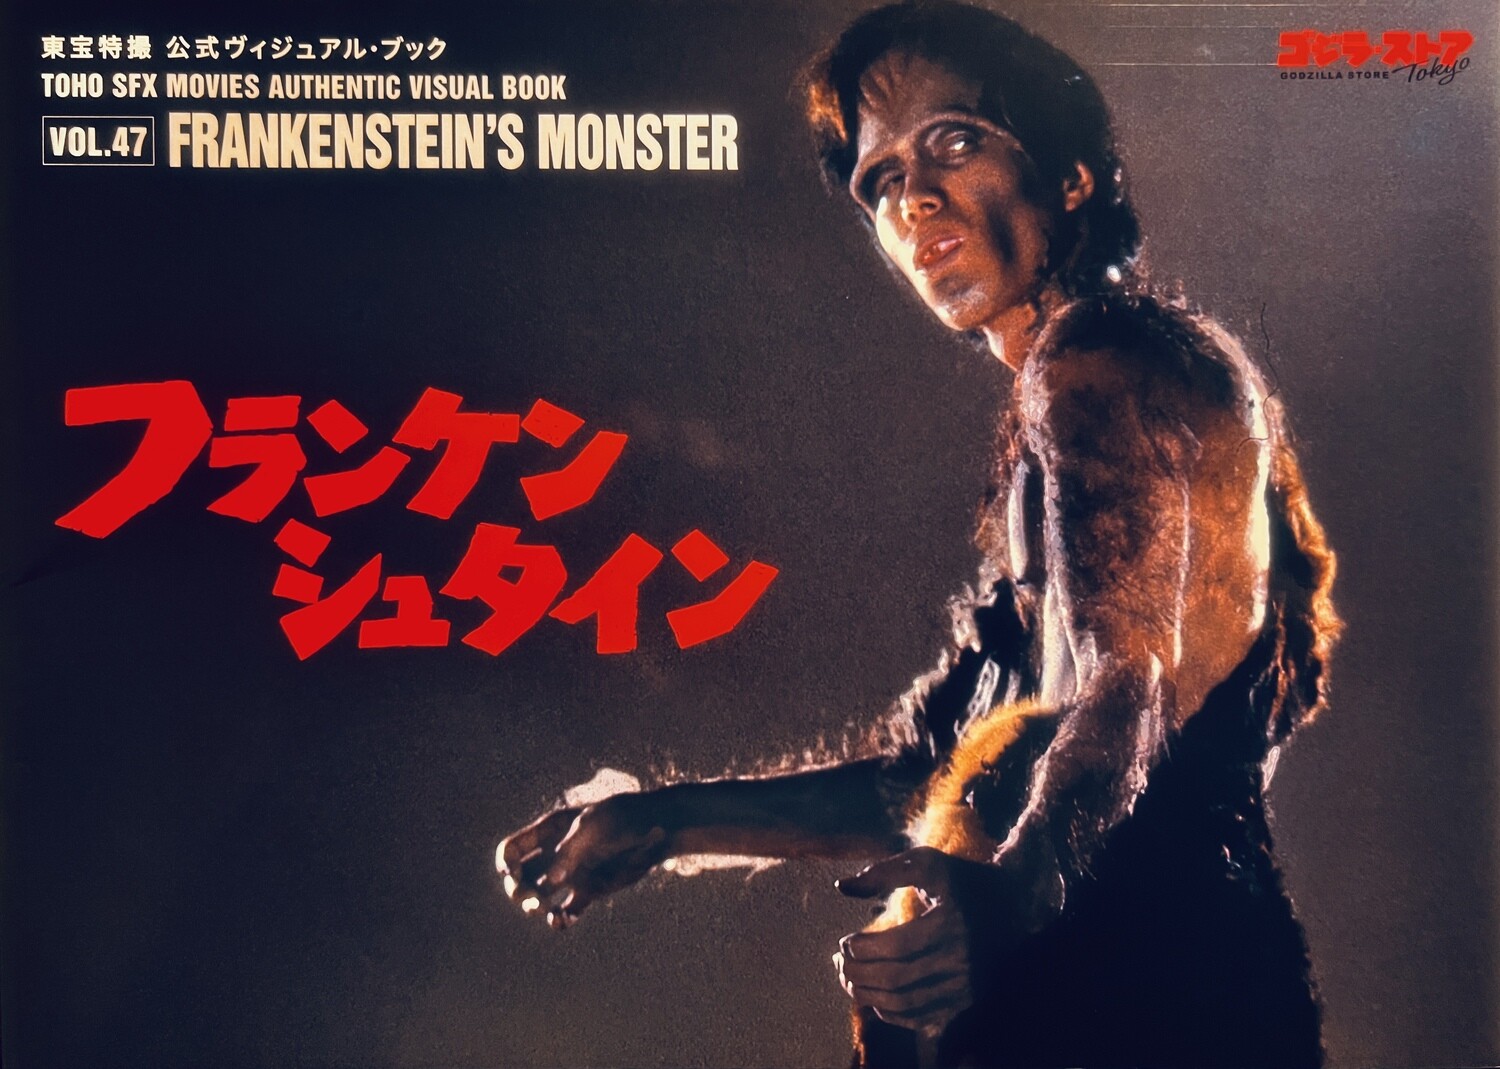 Frankenstein's Monster: Vol. 47 — Toho VFX Movies Authentic Visual Book